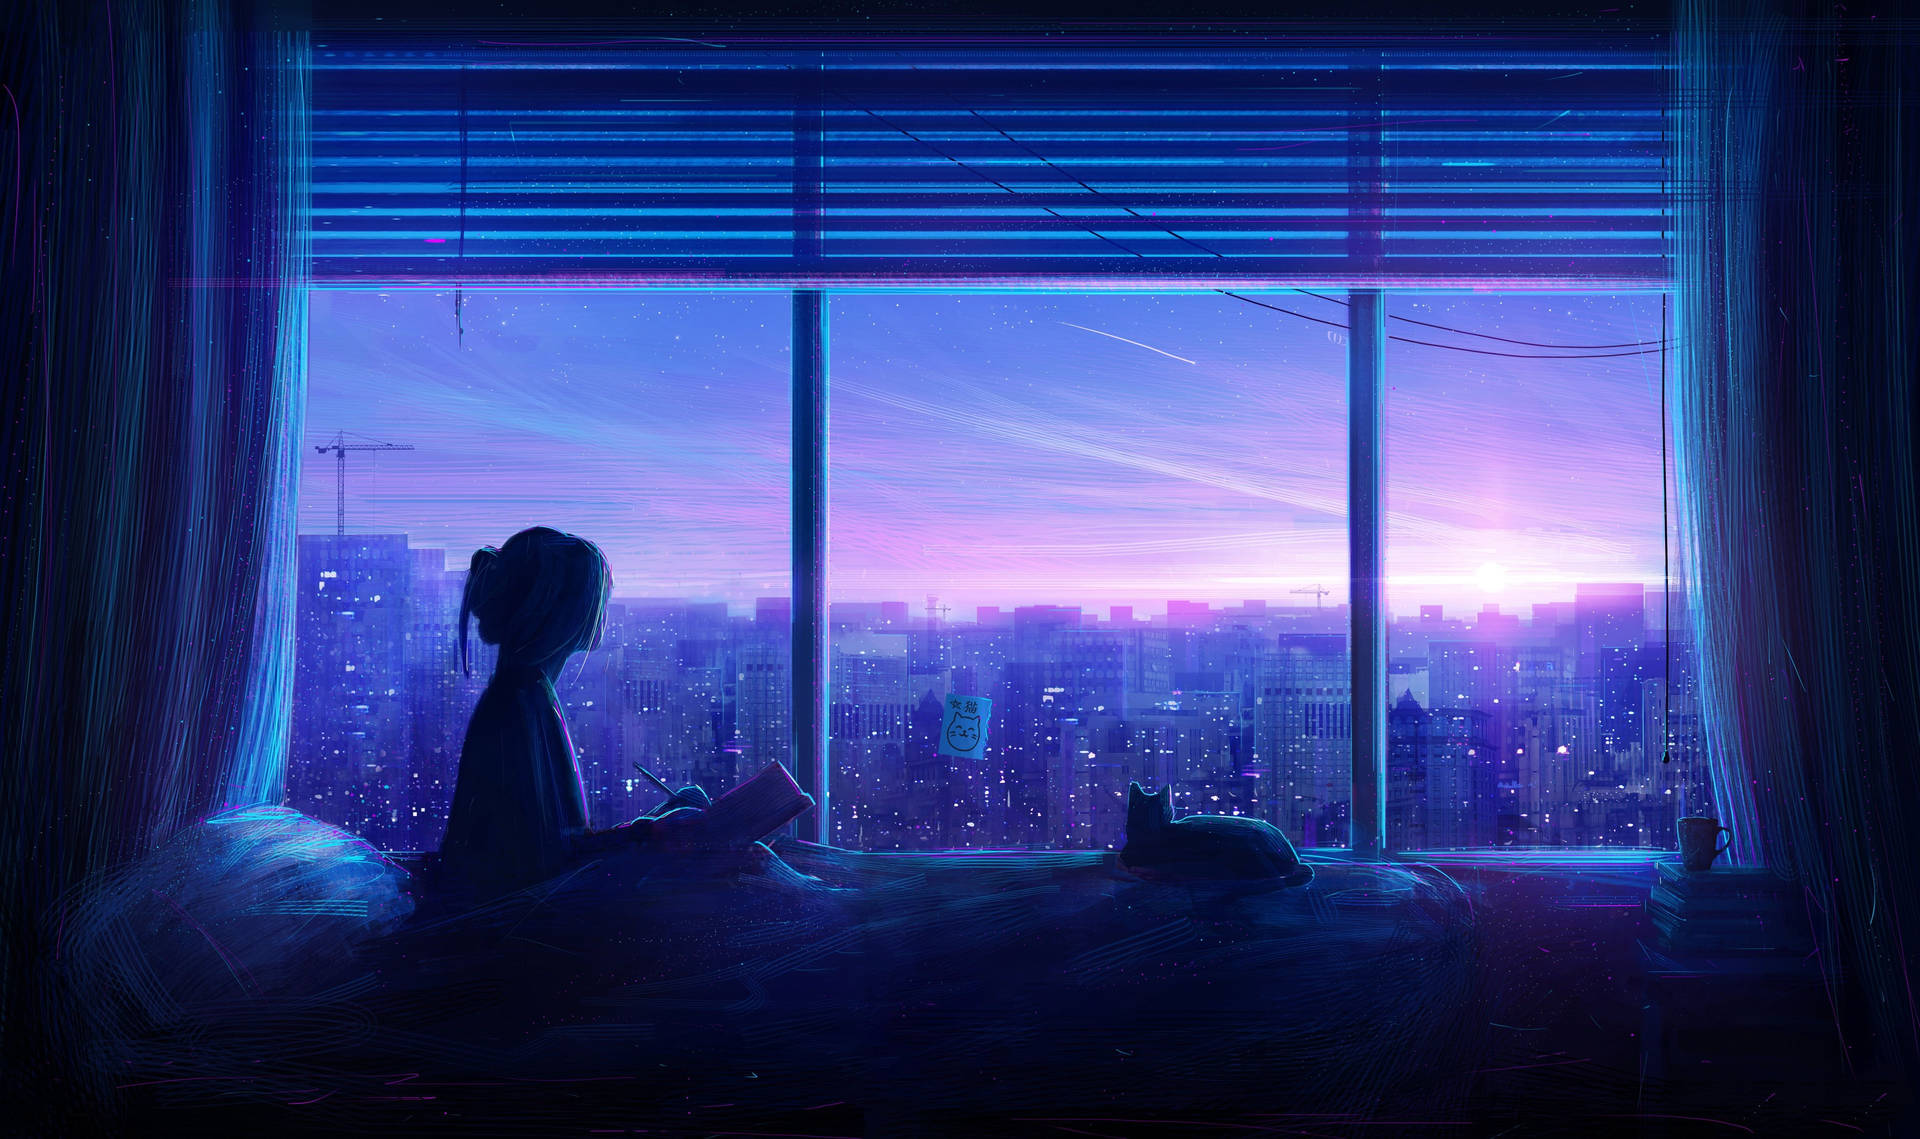 Blue Anime Silhouette Girl And Cat Aesthetic Wallpaper